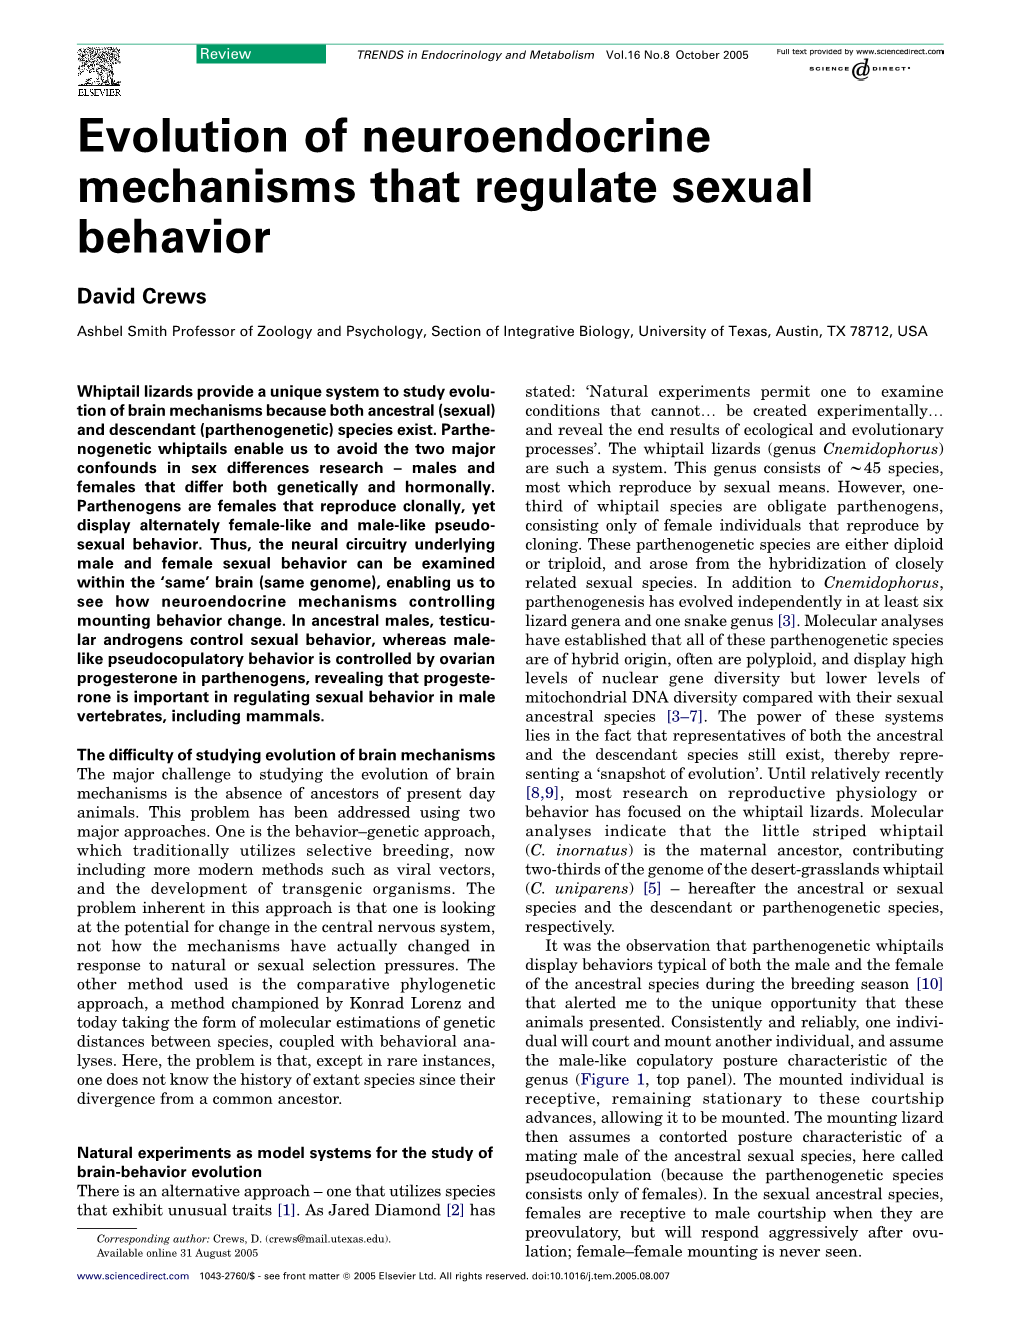 Evolution of Neuroendocrine Mechanisms That Regulate Sexual Behavior